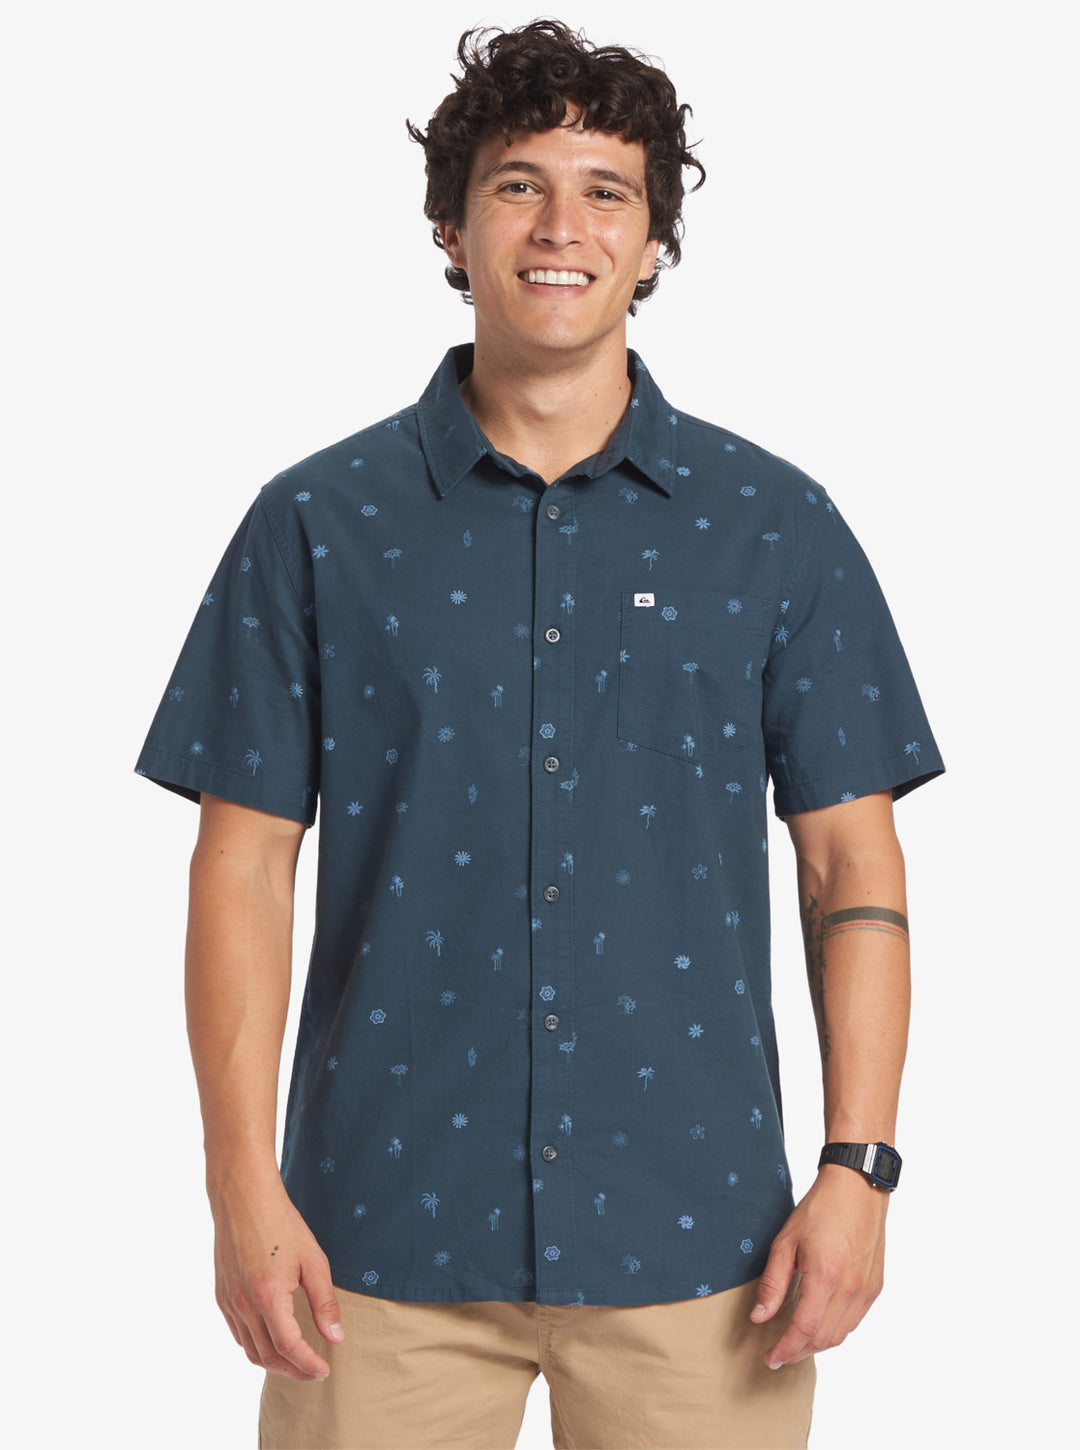 Quiksilver Pacific Stripe Short Sleeve Woven Shirt - Berring Sea - Sun Diego Boardshop